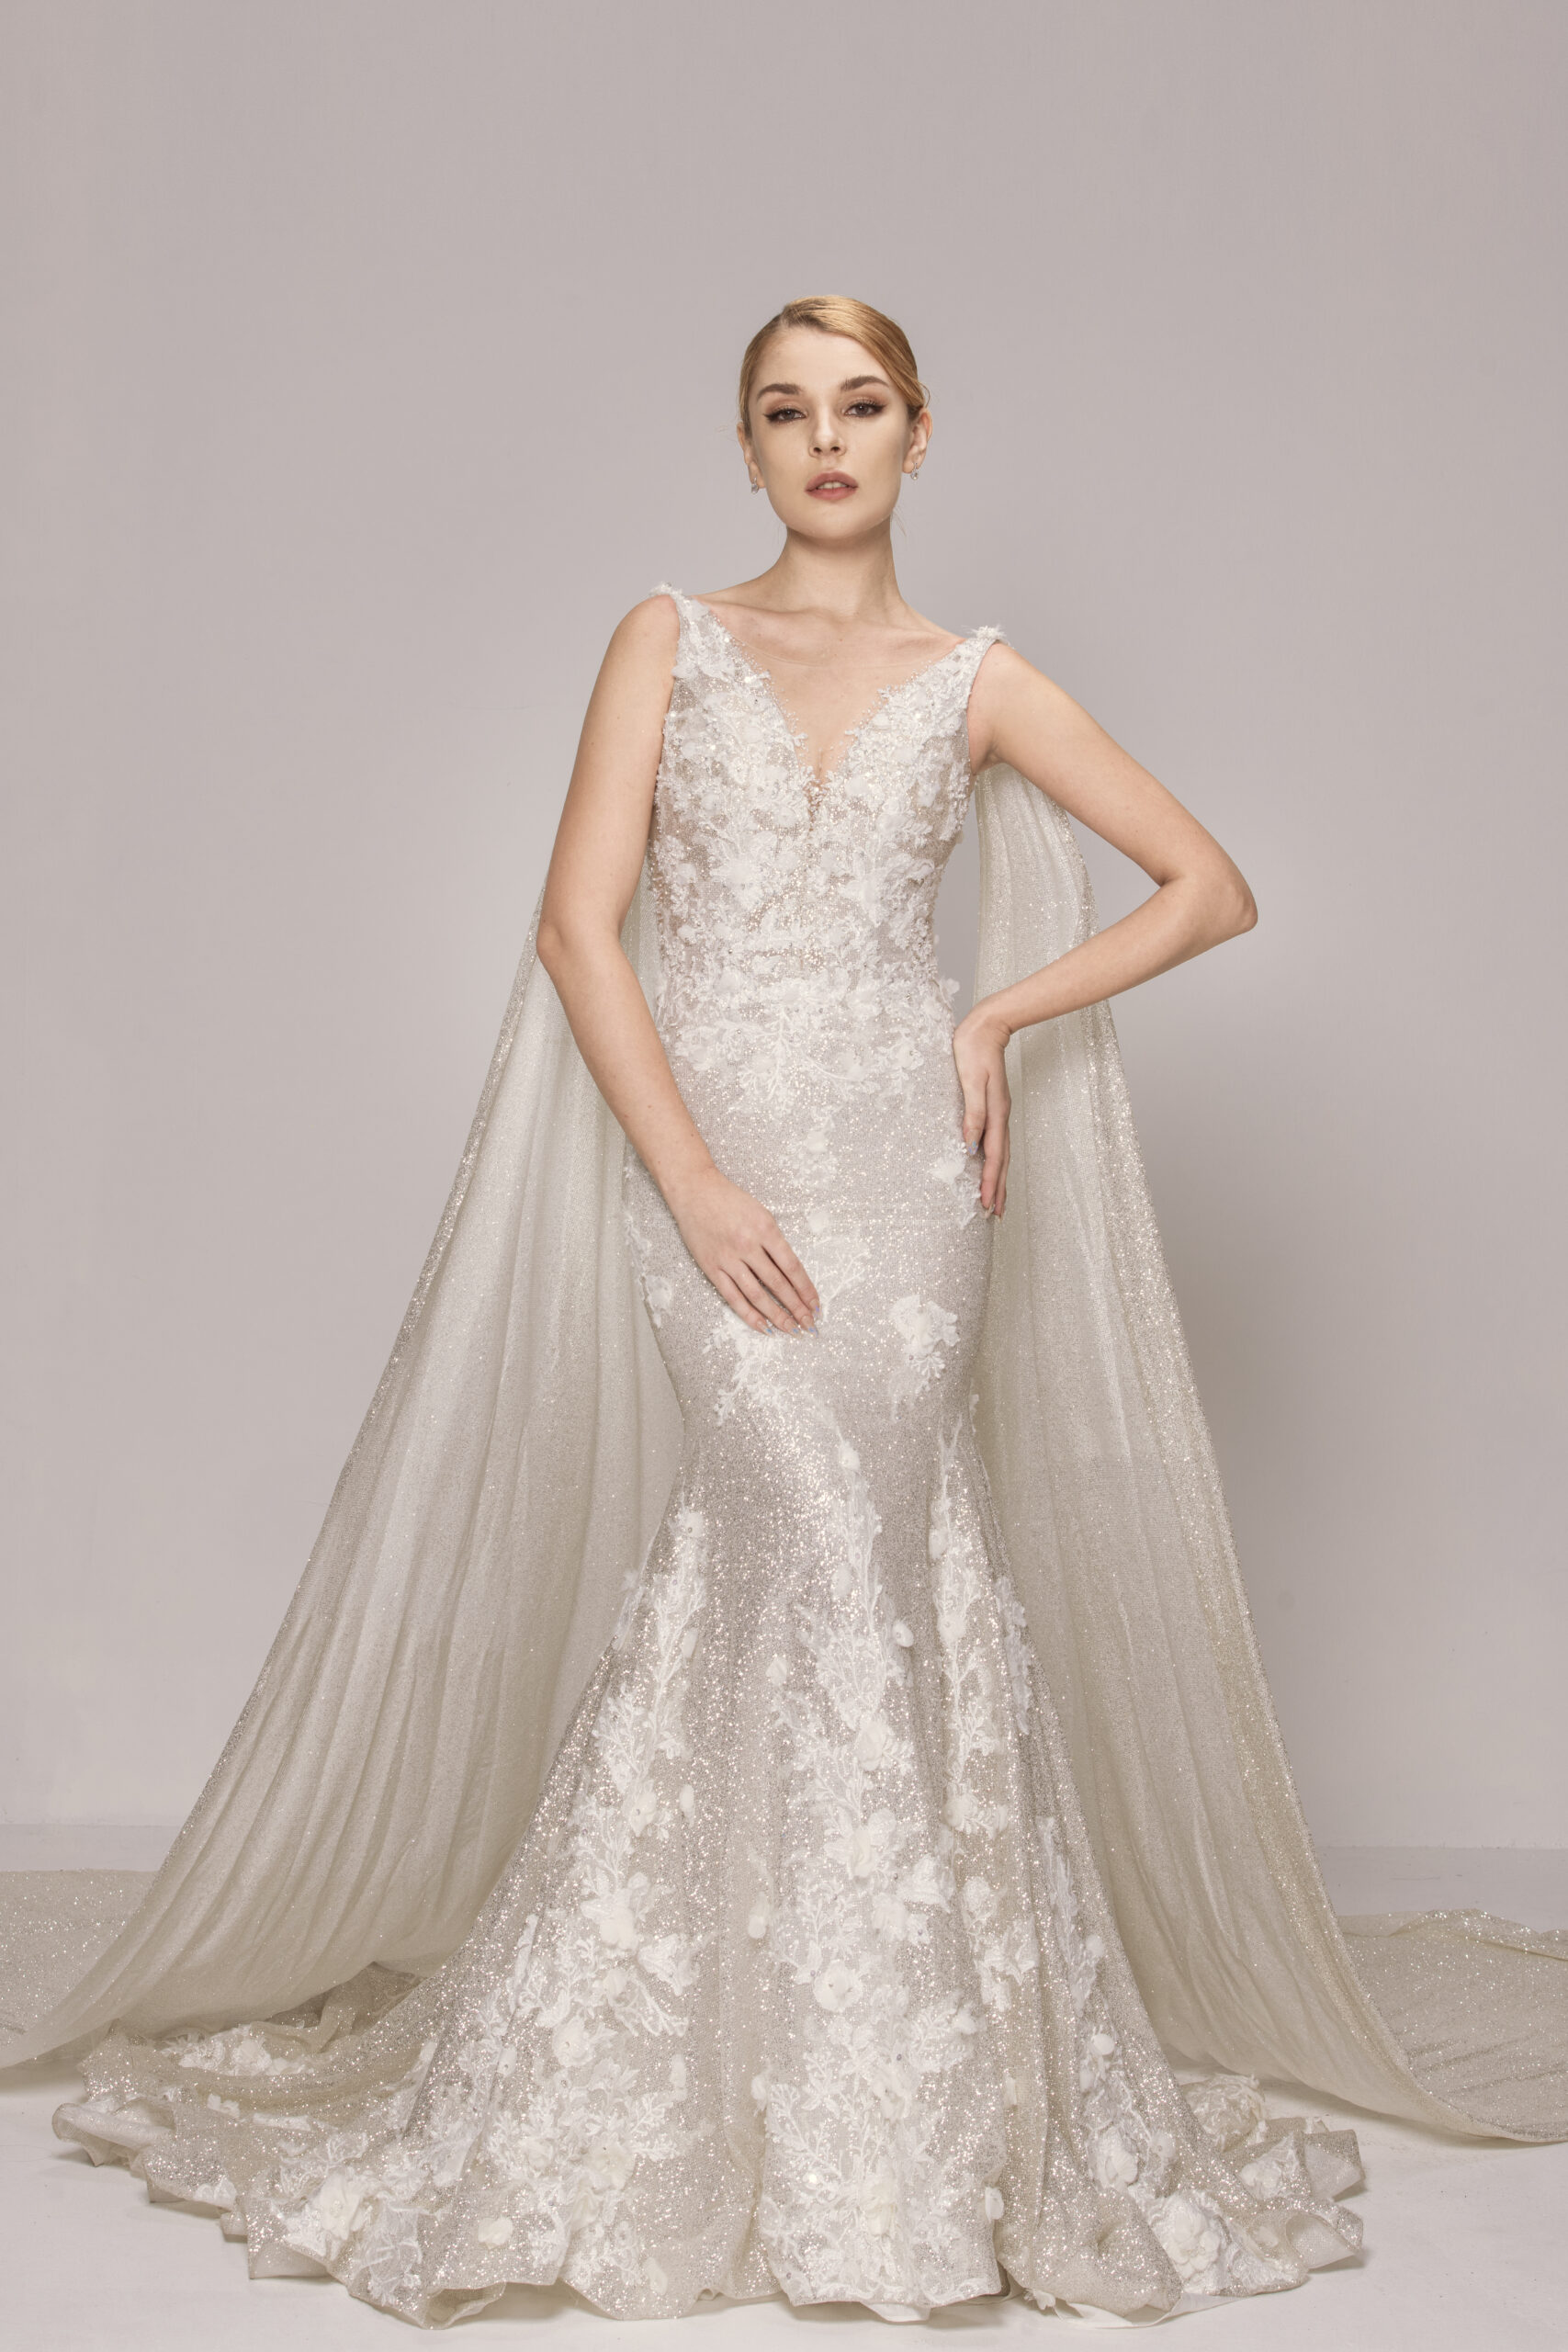 Evangeline Premium Gown - For Her Wedding Gallery